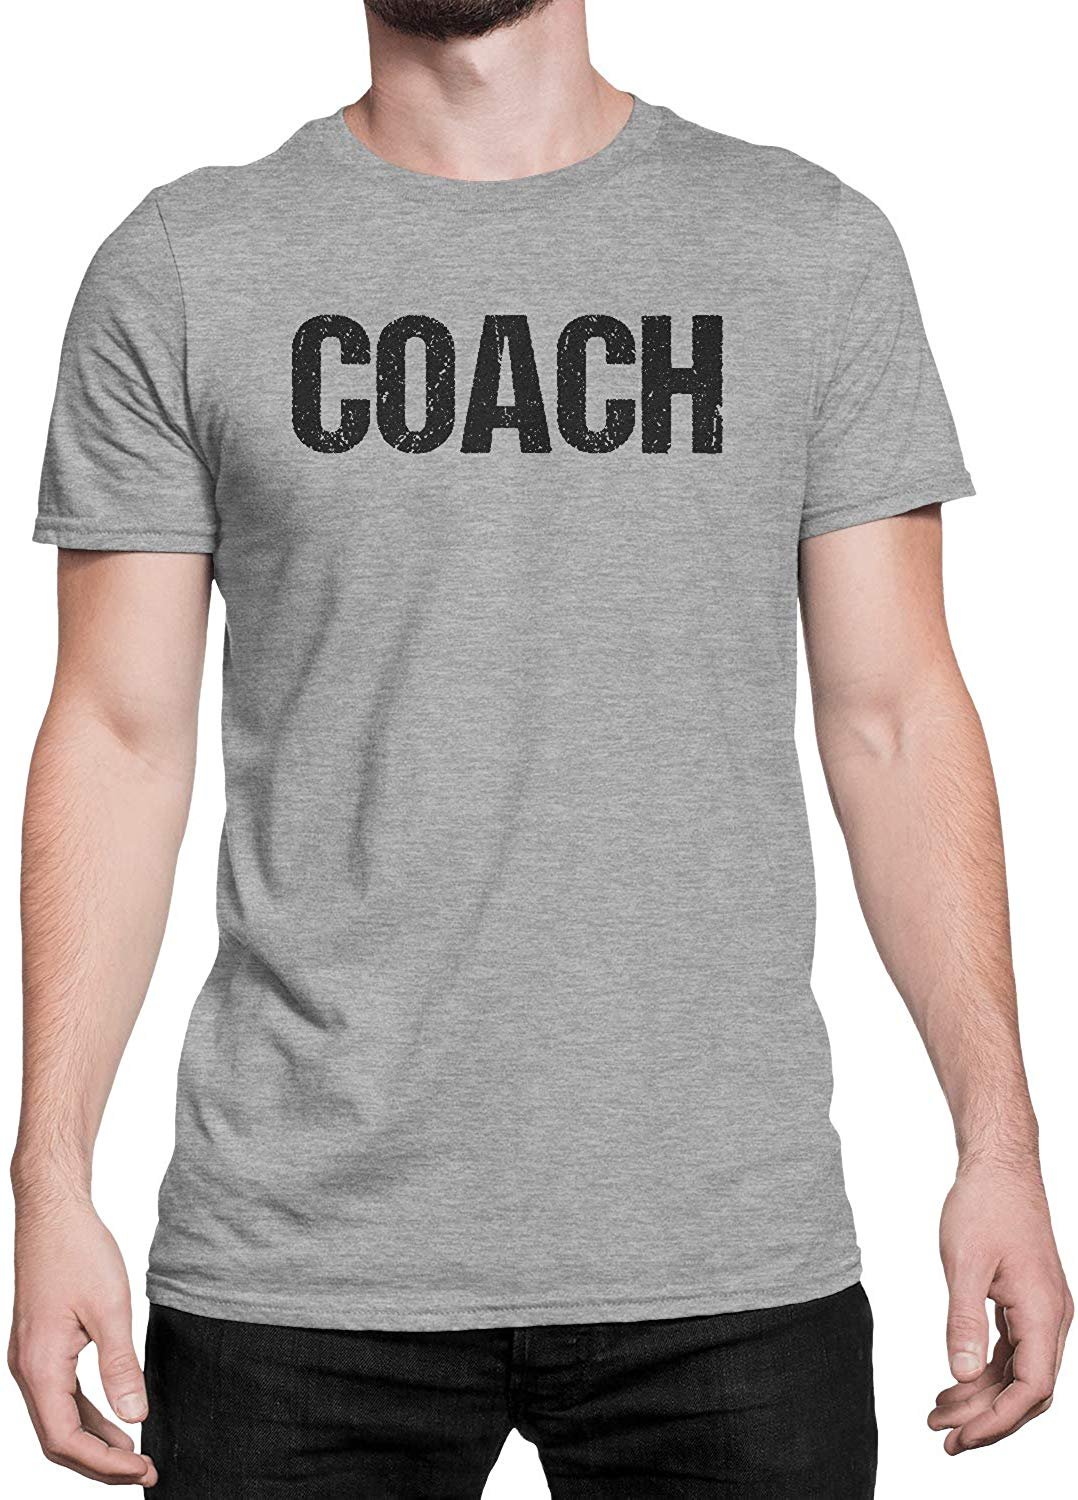 Coach T-Shirt Sports Coaching Tee Shirt (Heather Gray & Black, Distressed)